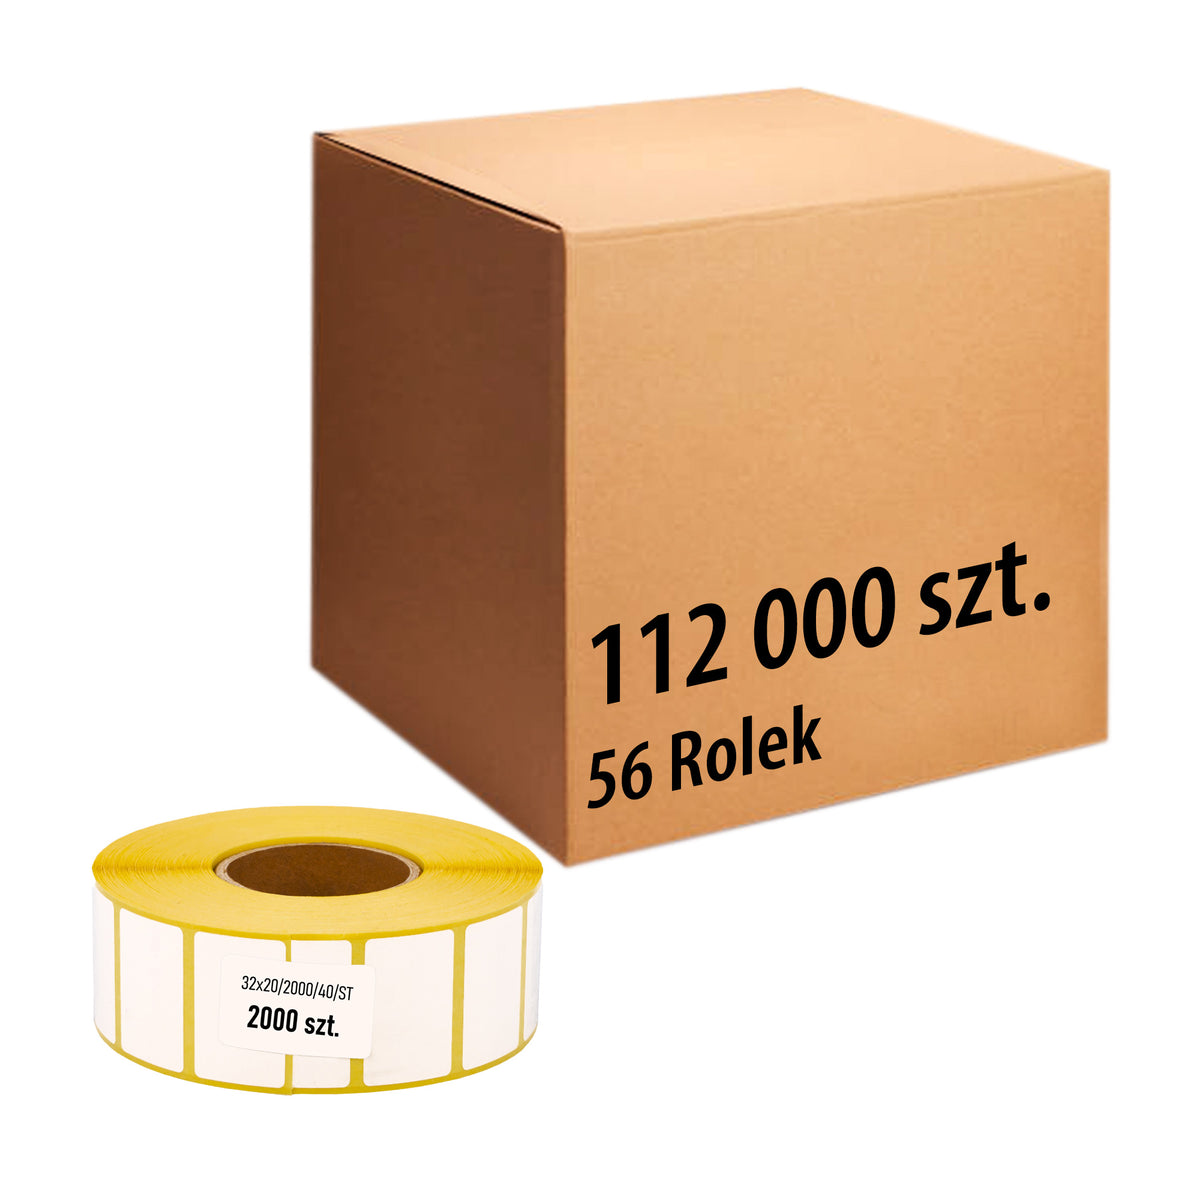 Etykiety termiczne 32x20mm 2000' 56 rolek - 112000 sztuk etykiet